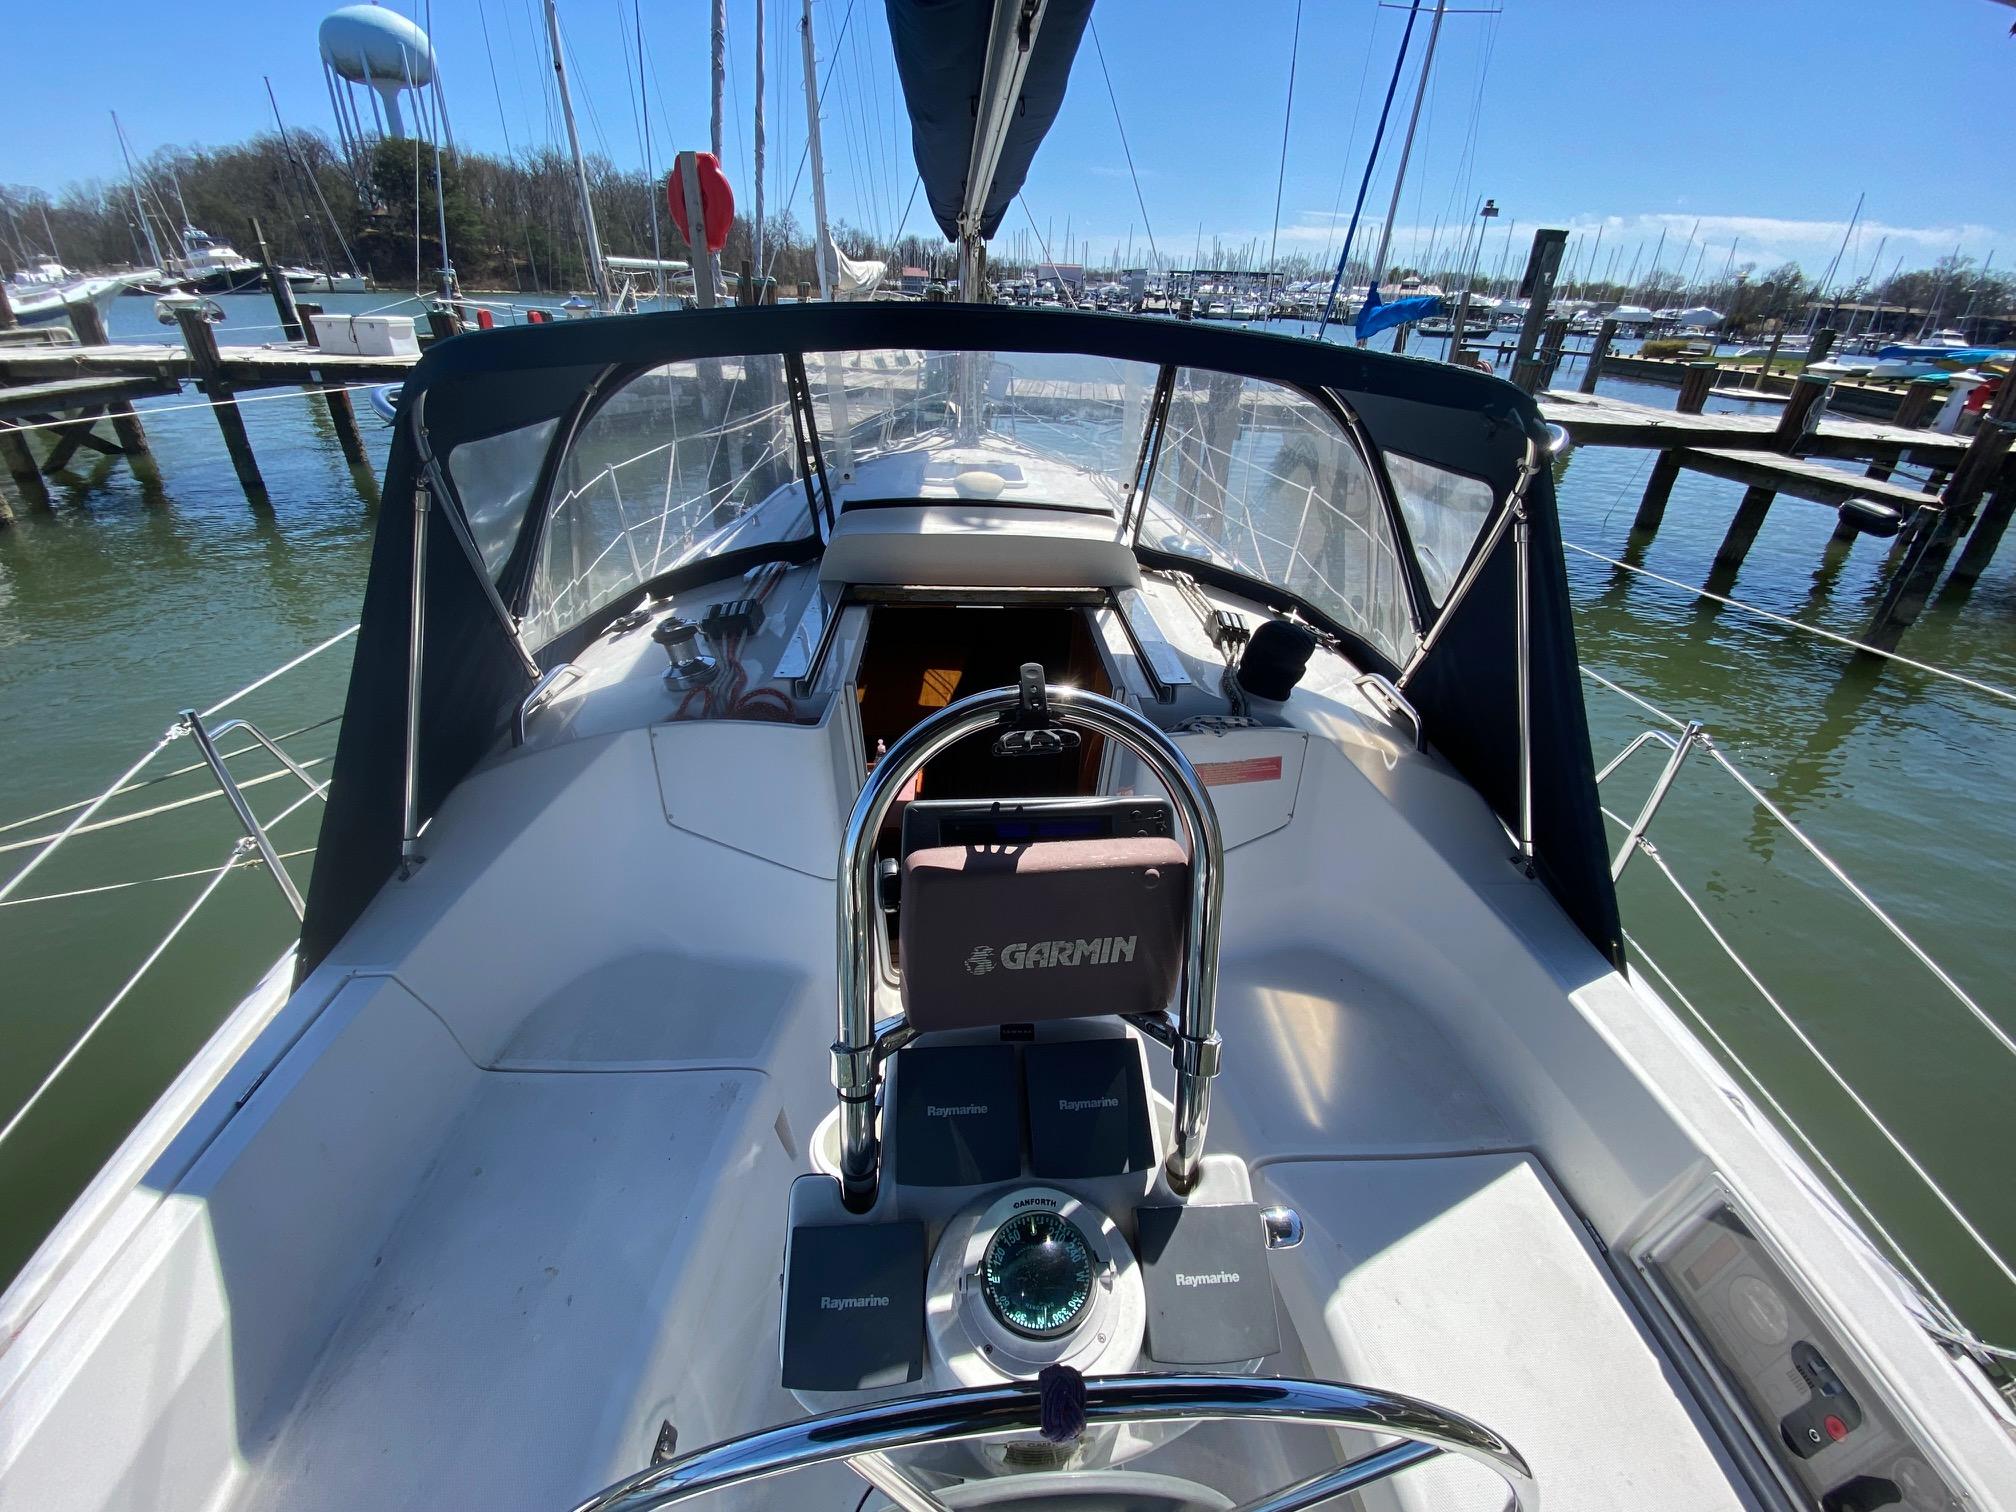 Slip Slidin' Away Yacht Brokers of Annapolis